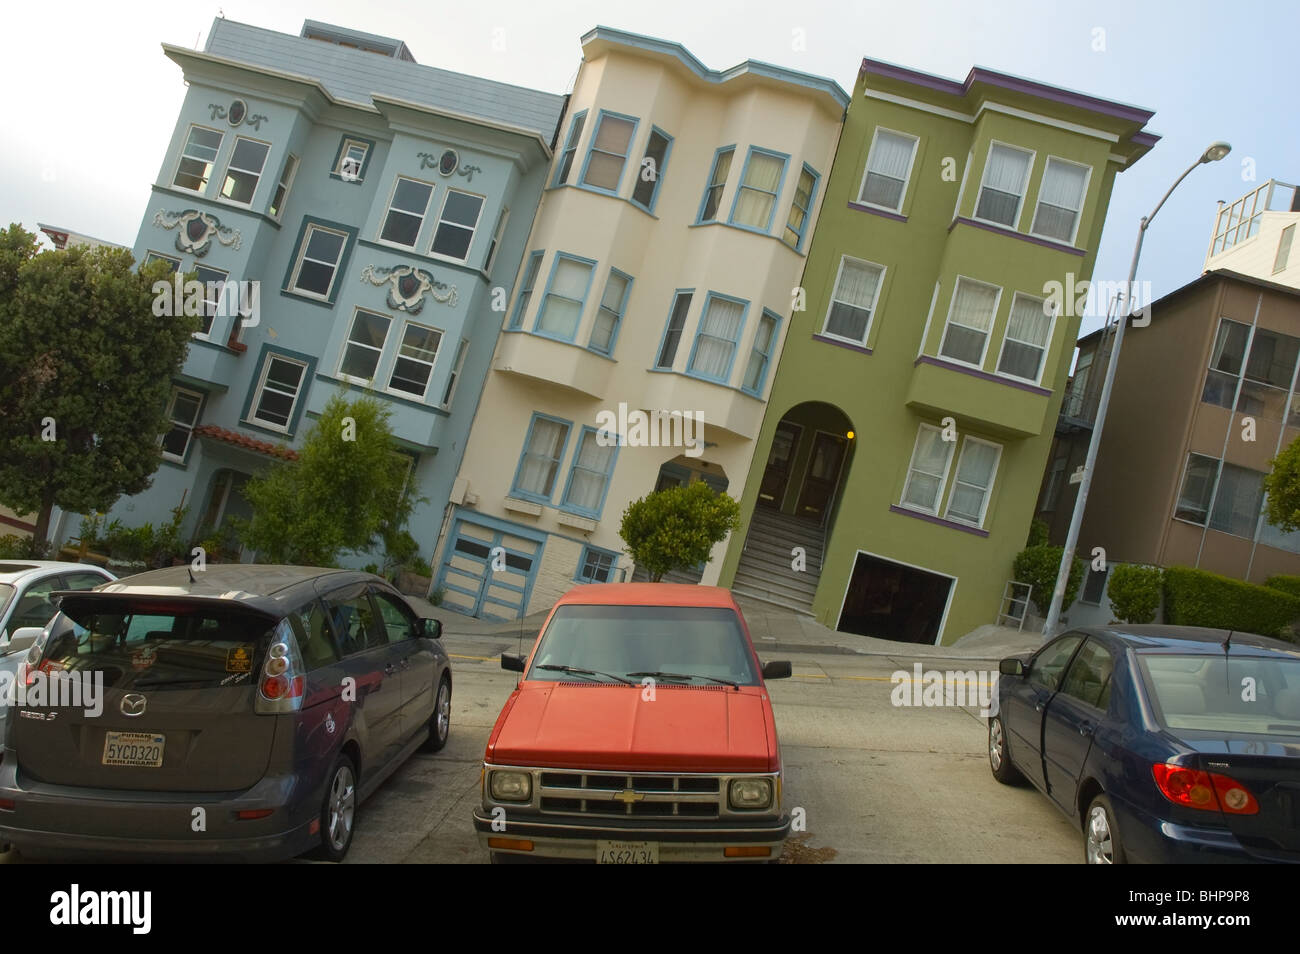 Houses on a steep street in San Francisco, California, USA Stock Photo